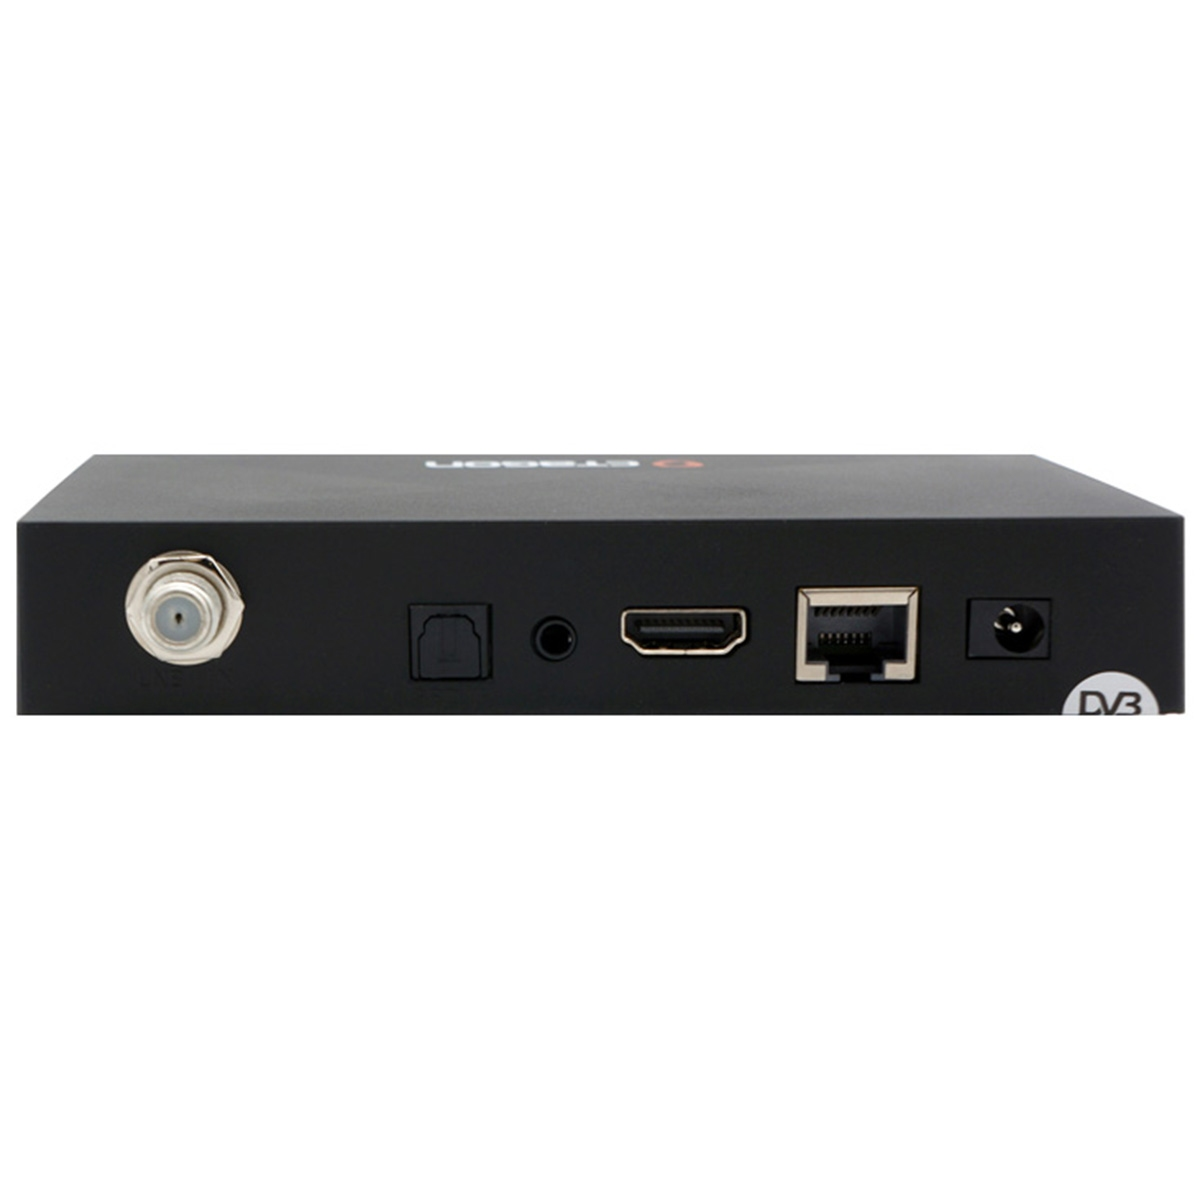 OCTAGON SX89 Linux Tuner IP WiFi Sat Sat LAN IP (Schwarz) WL DVB-S2 HDMI H.265 HD Receiver Receiver Full